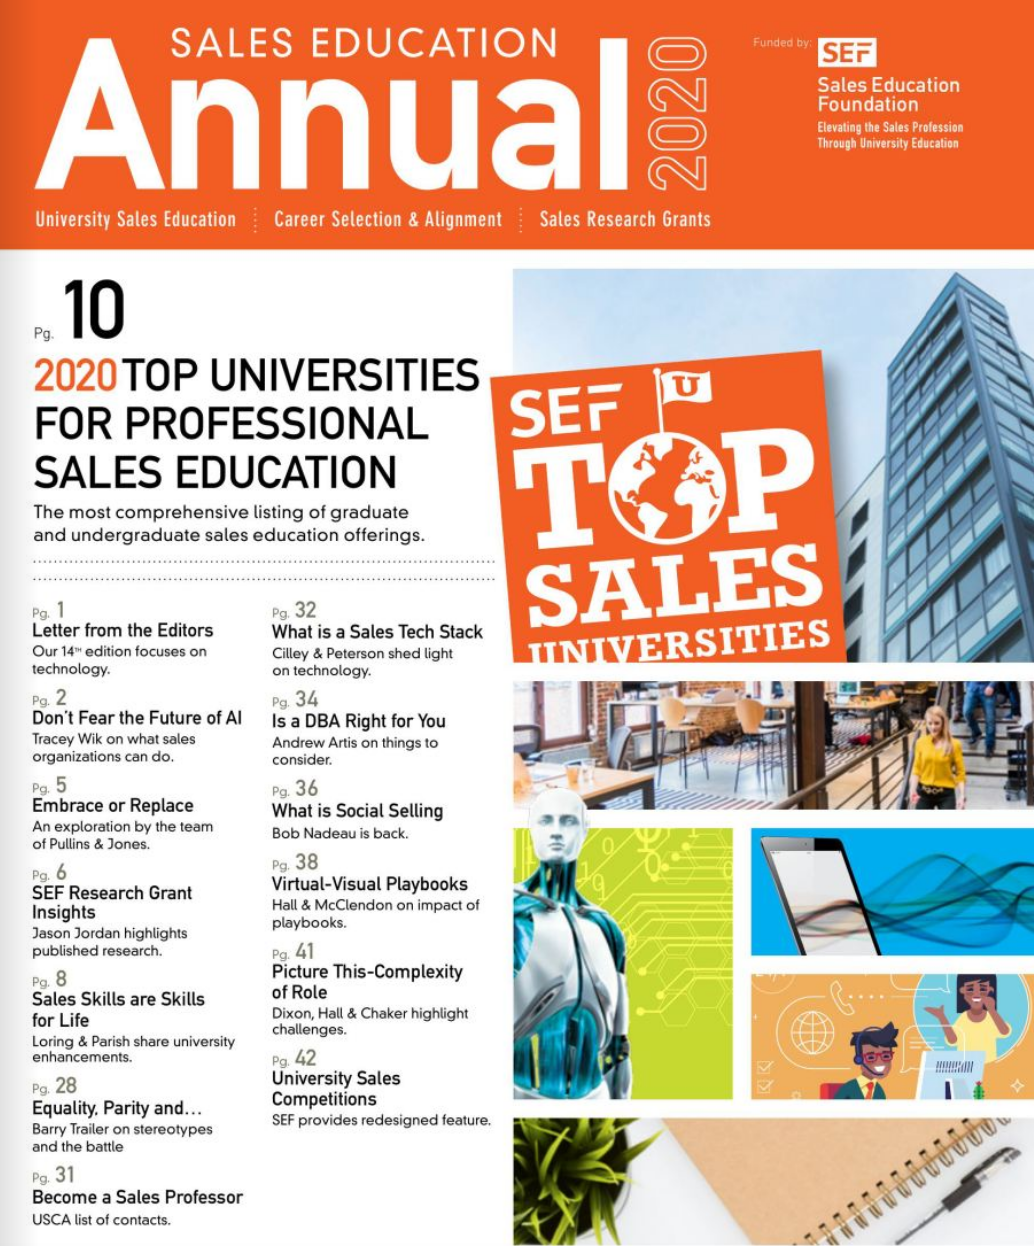 Sales Education Foundation Annual magazine